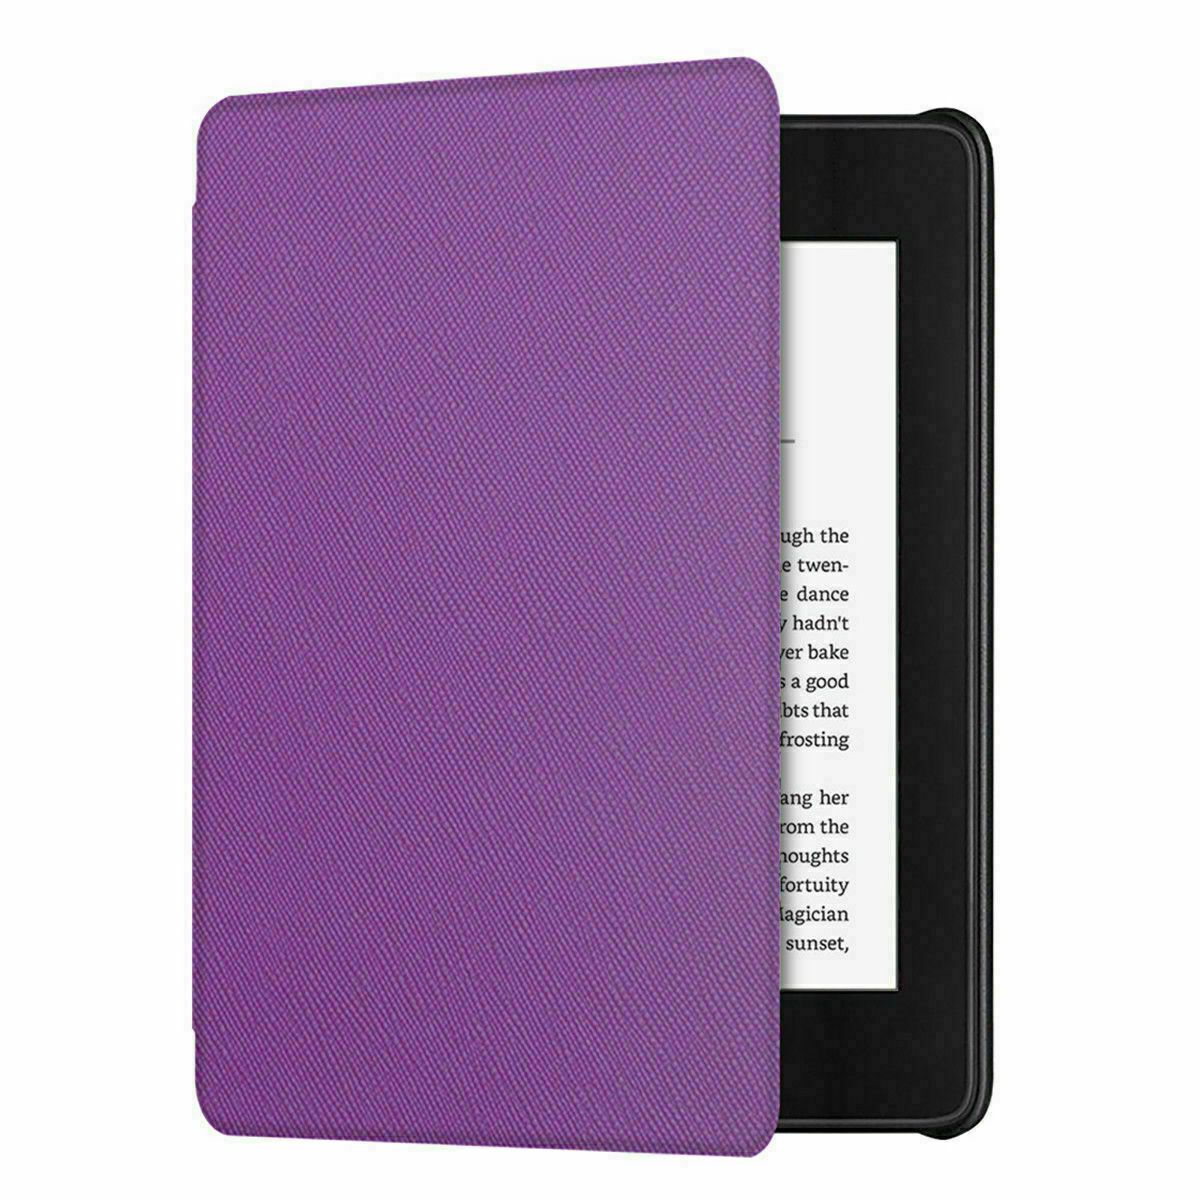 Amazon KINDLE Paperwhite 10th Flip Leather Folio Case Cover Slim Magnetic-Purple